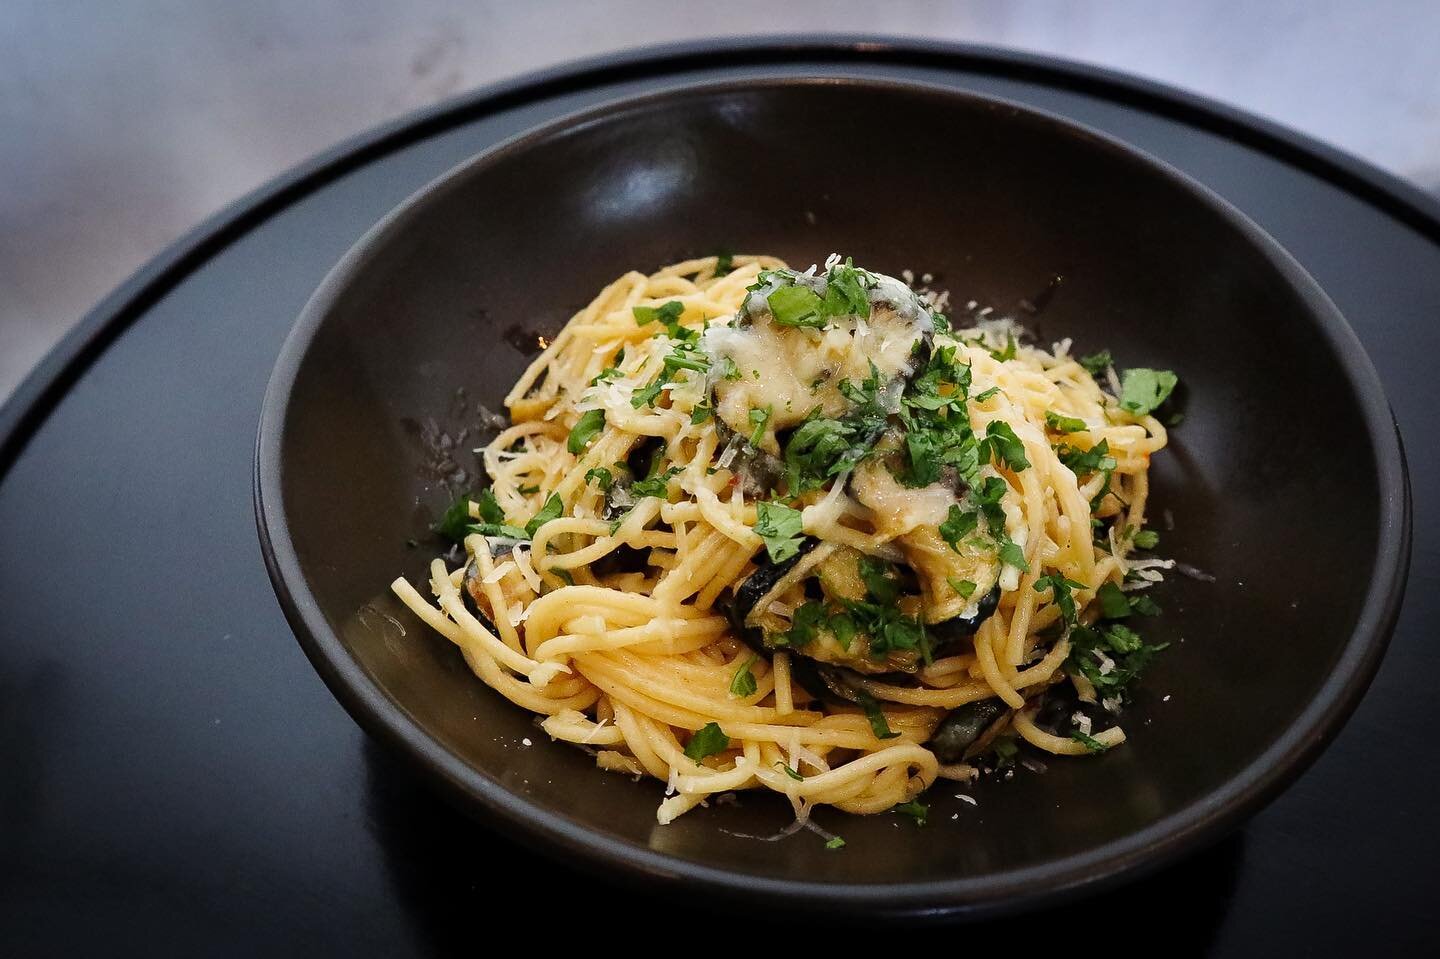 That zucchini spaghetti @stanleytucci loves - Spaghetti alla Nerano.
.
.
.
#spaghettiwithzucchini #pasta #pastanight #pastalover #spaghettiallanerano #stanleytucci #platingsandpairings #zucchini #sydneyfood